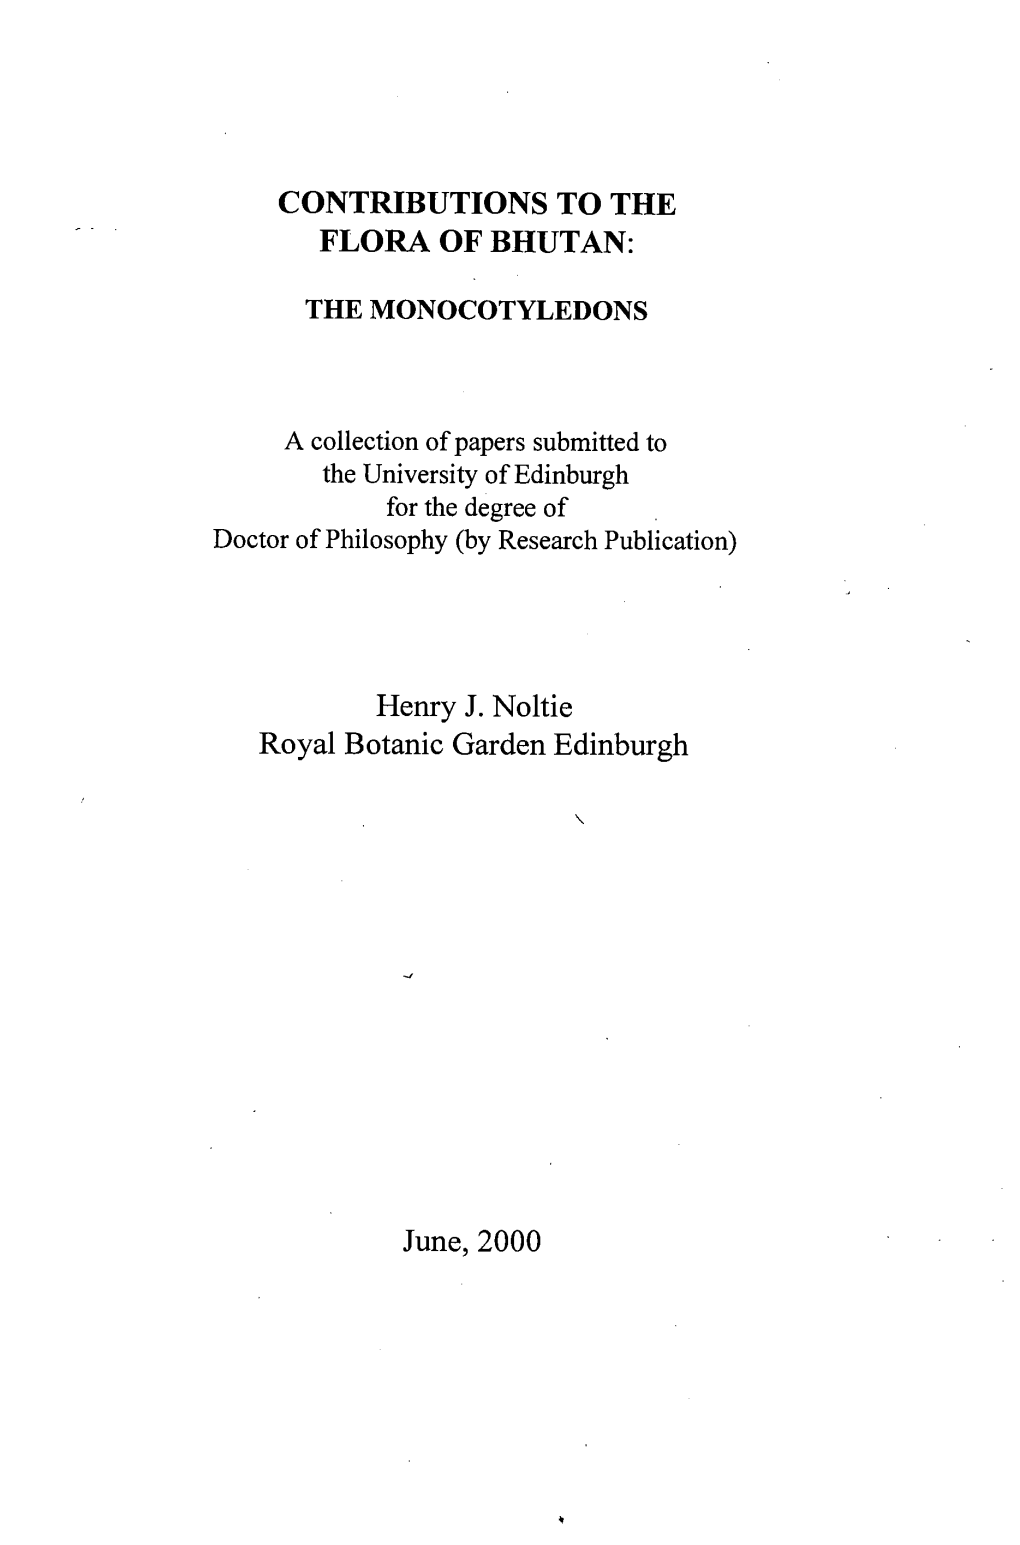 CONTRIBUTIONS to the FLORA of BHUTAN: Henry J. Noltie Royal Botanic Garden Edinburgh June, 2000